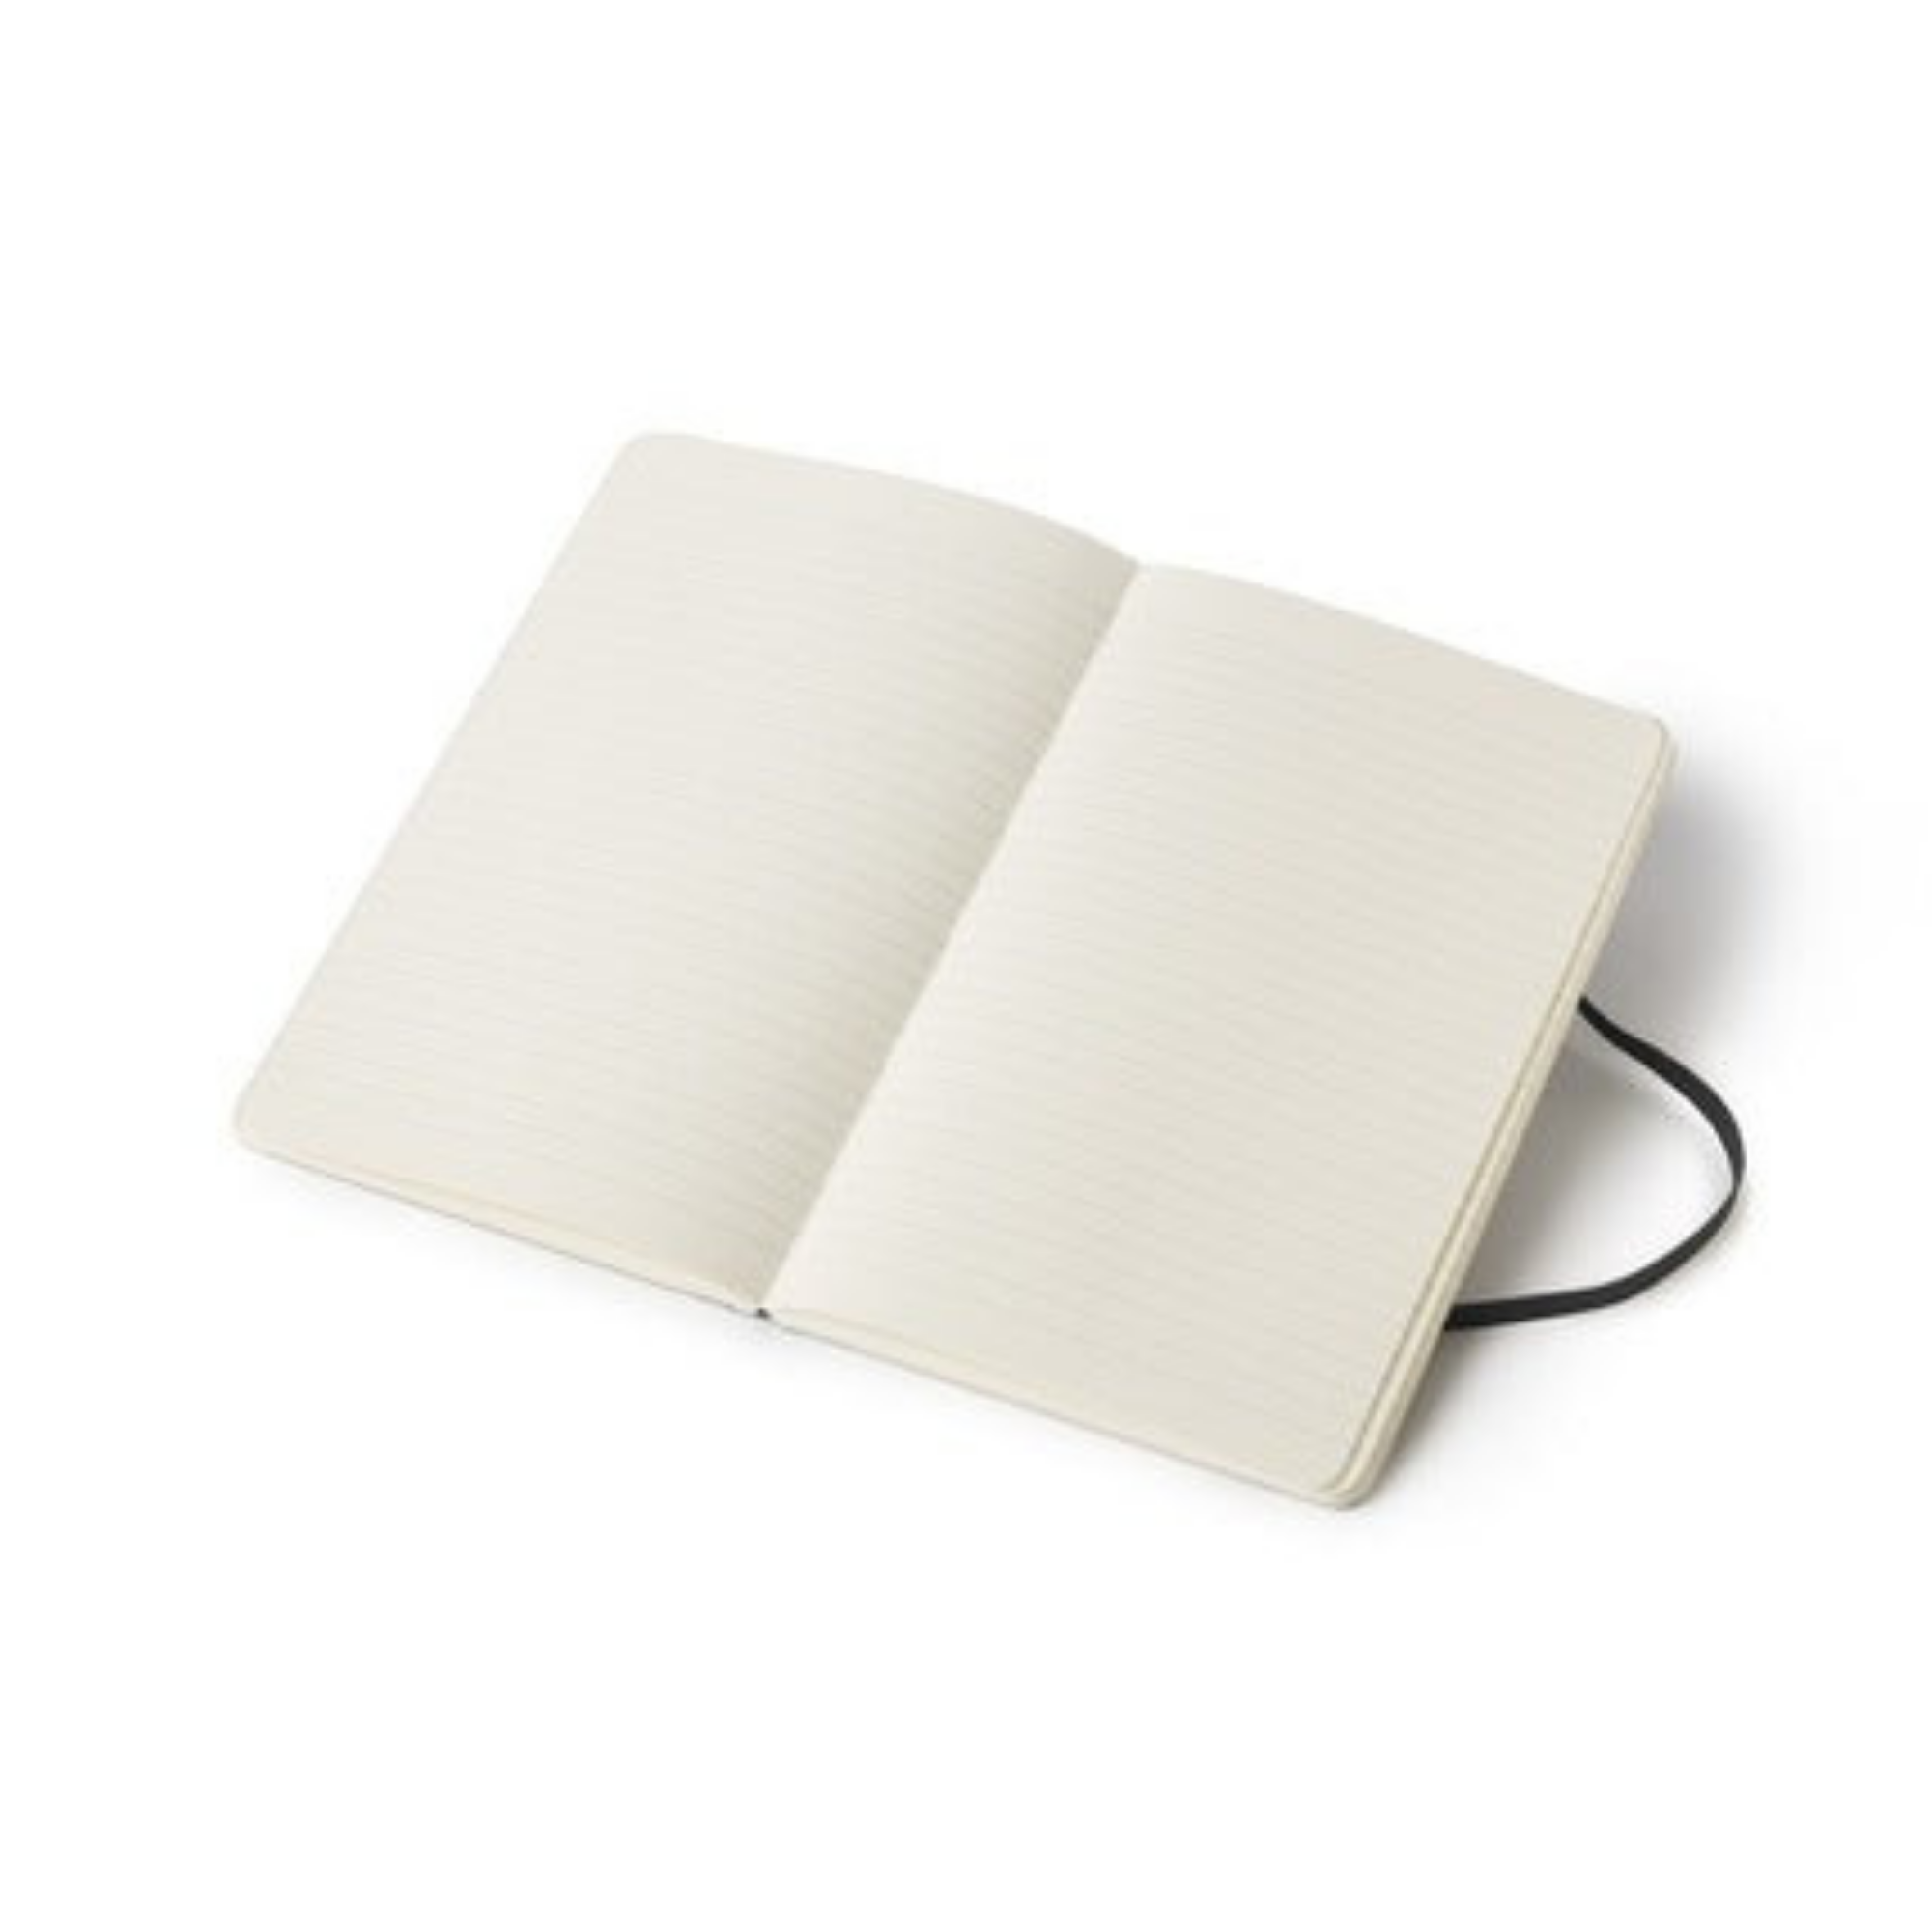 Moleskine Classic Large Ruled Hard Cover Notebook